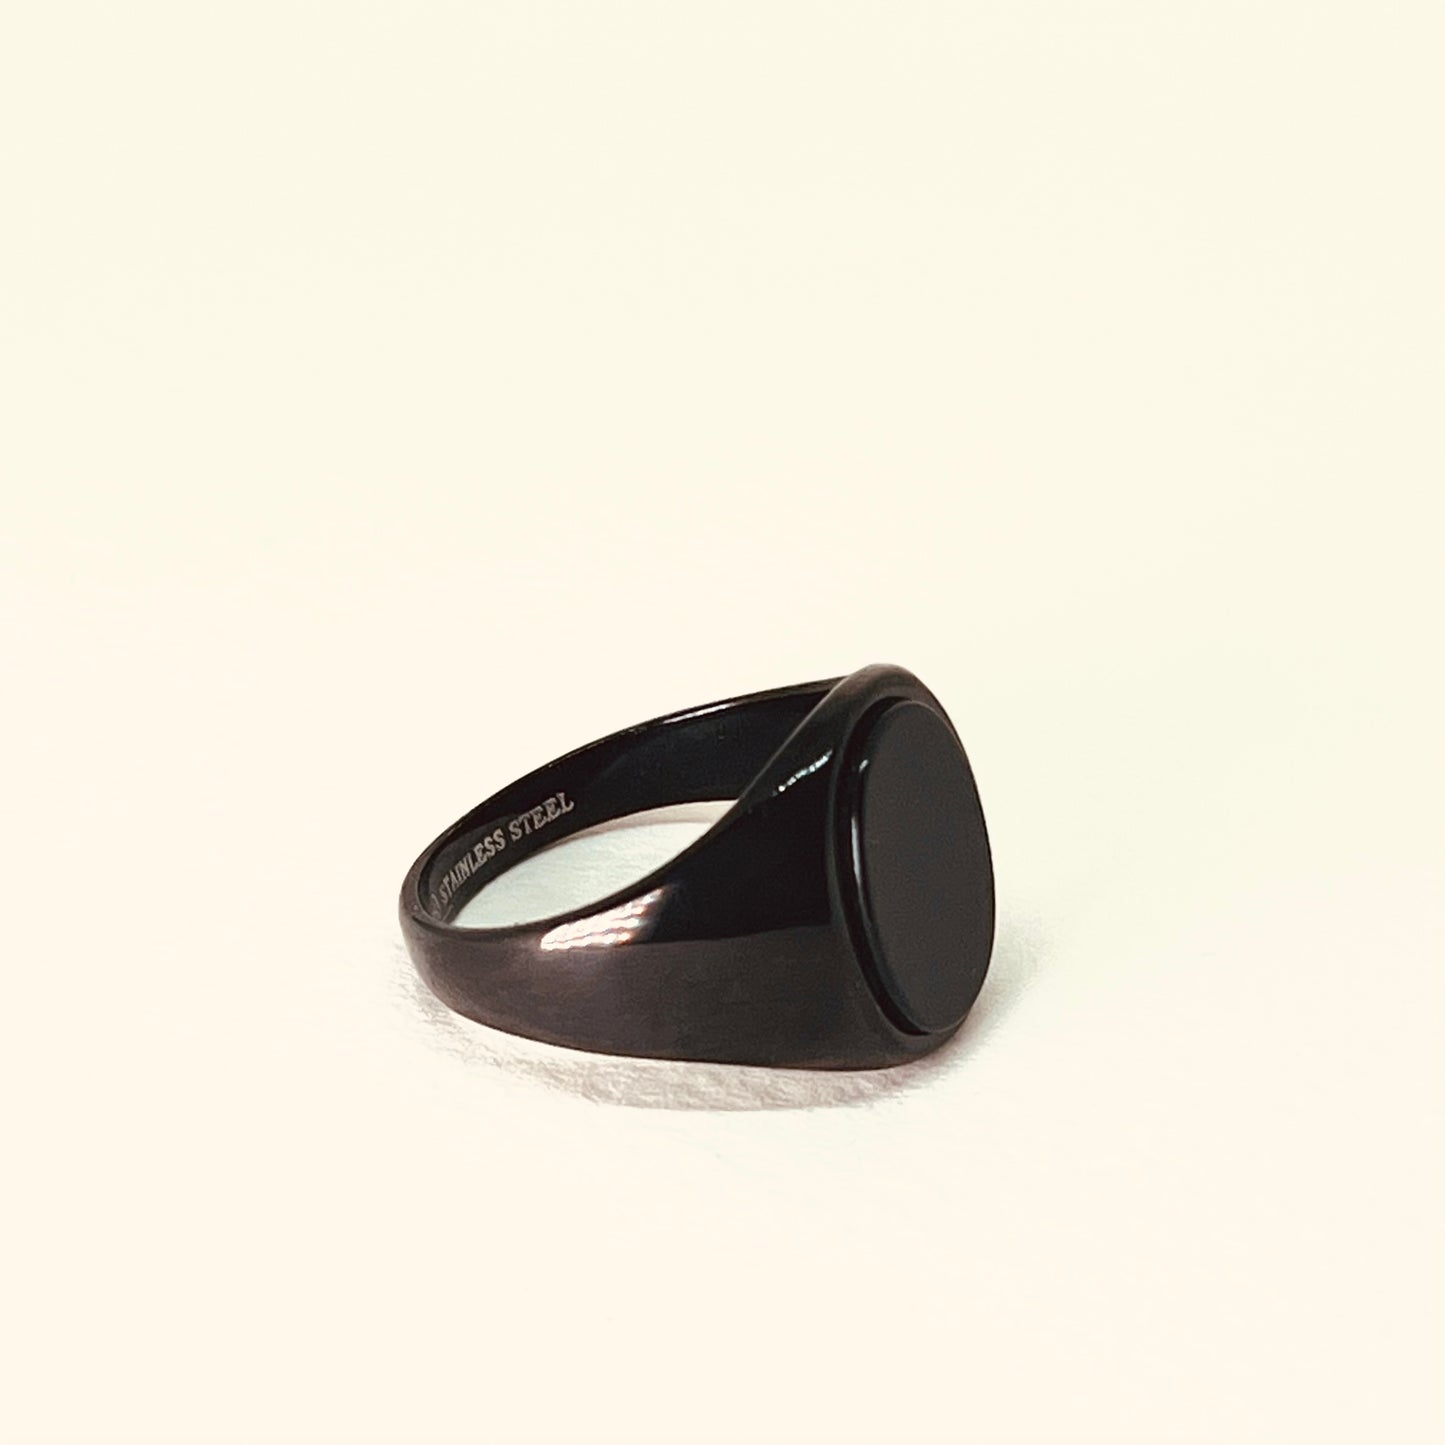 Onyx Signet Ring